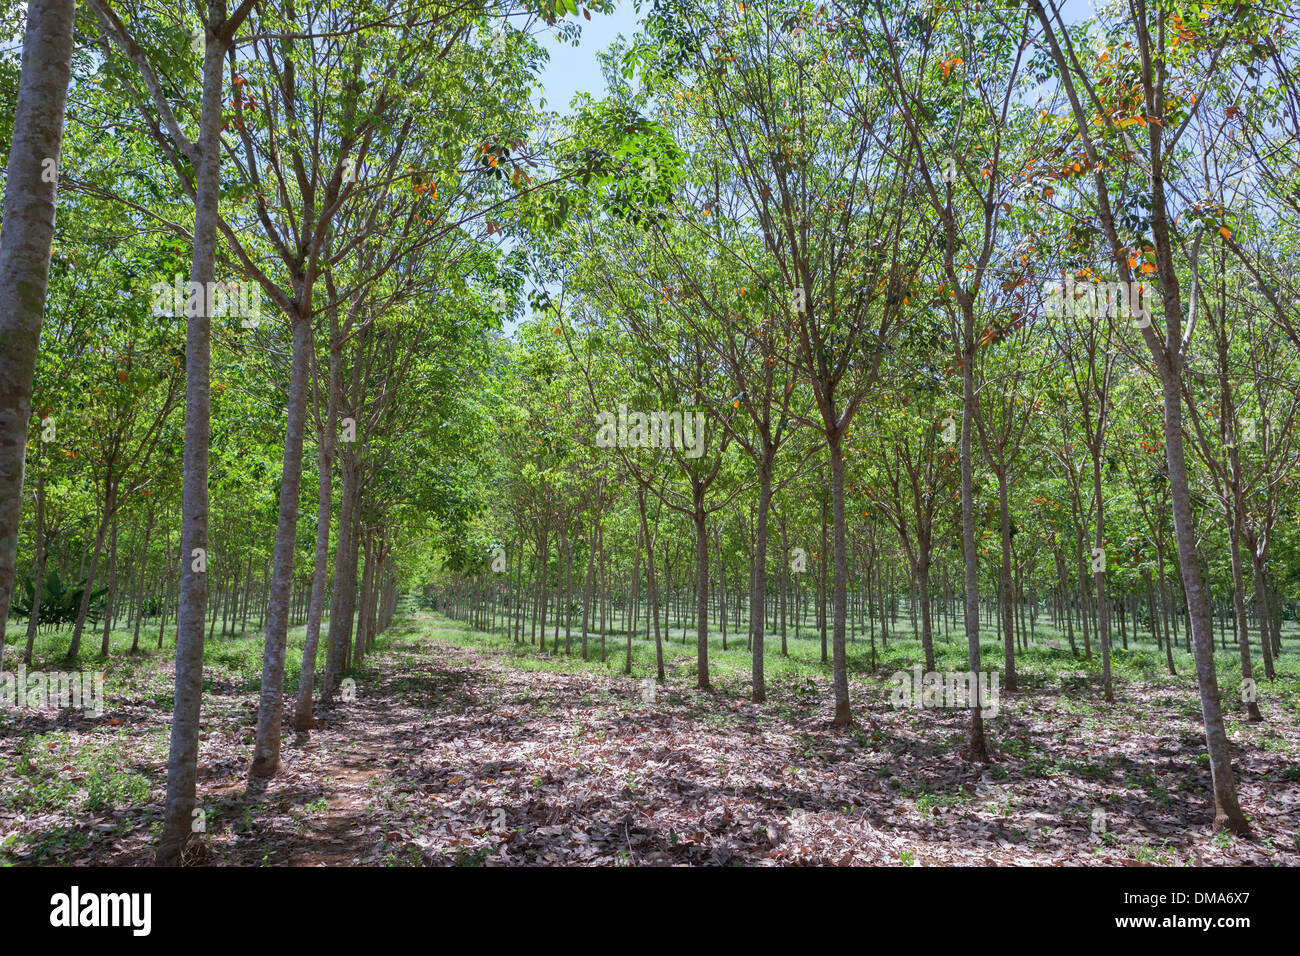 Rubber tree plantation, southern Thailand Stock Photo